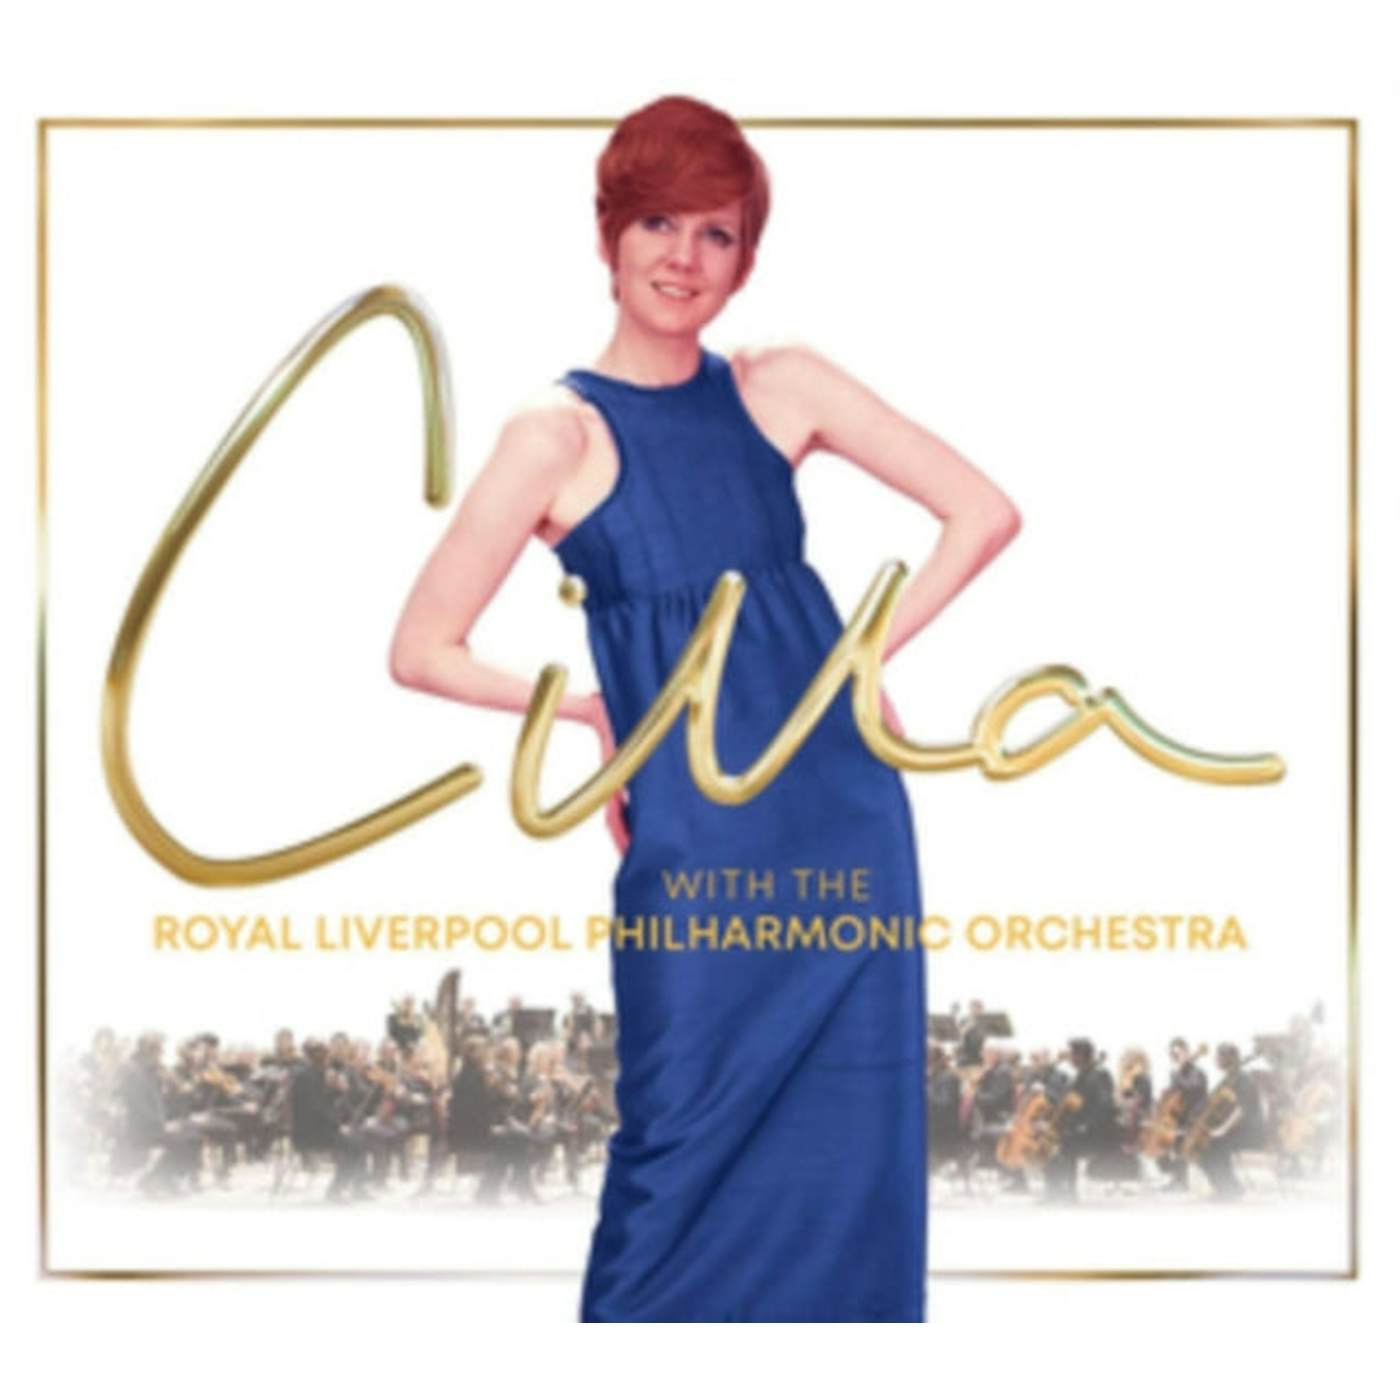 Cilla Black CD - Cilla With The Royal Liverpool Philharmonic Orchestra